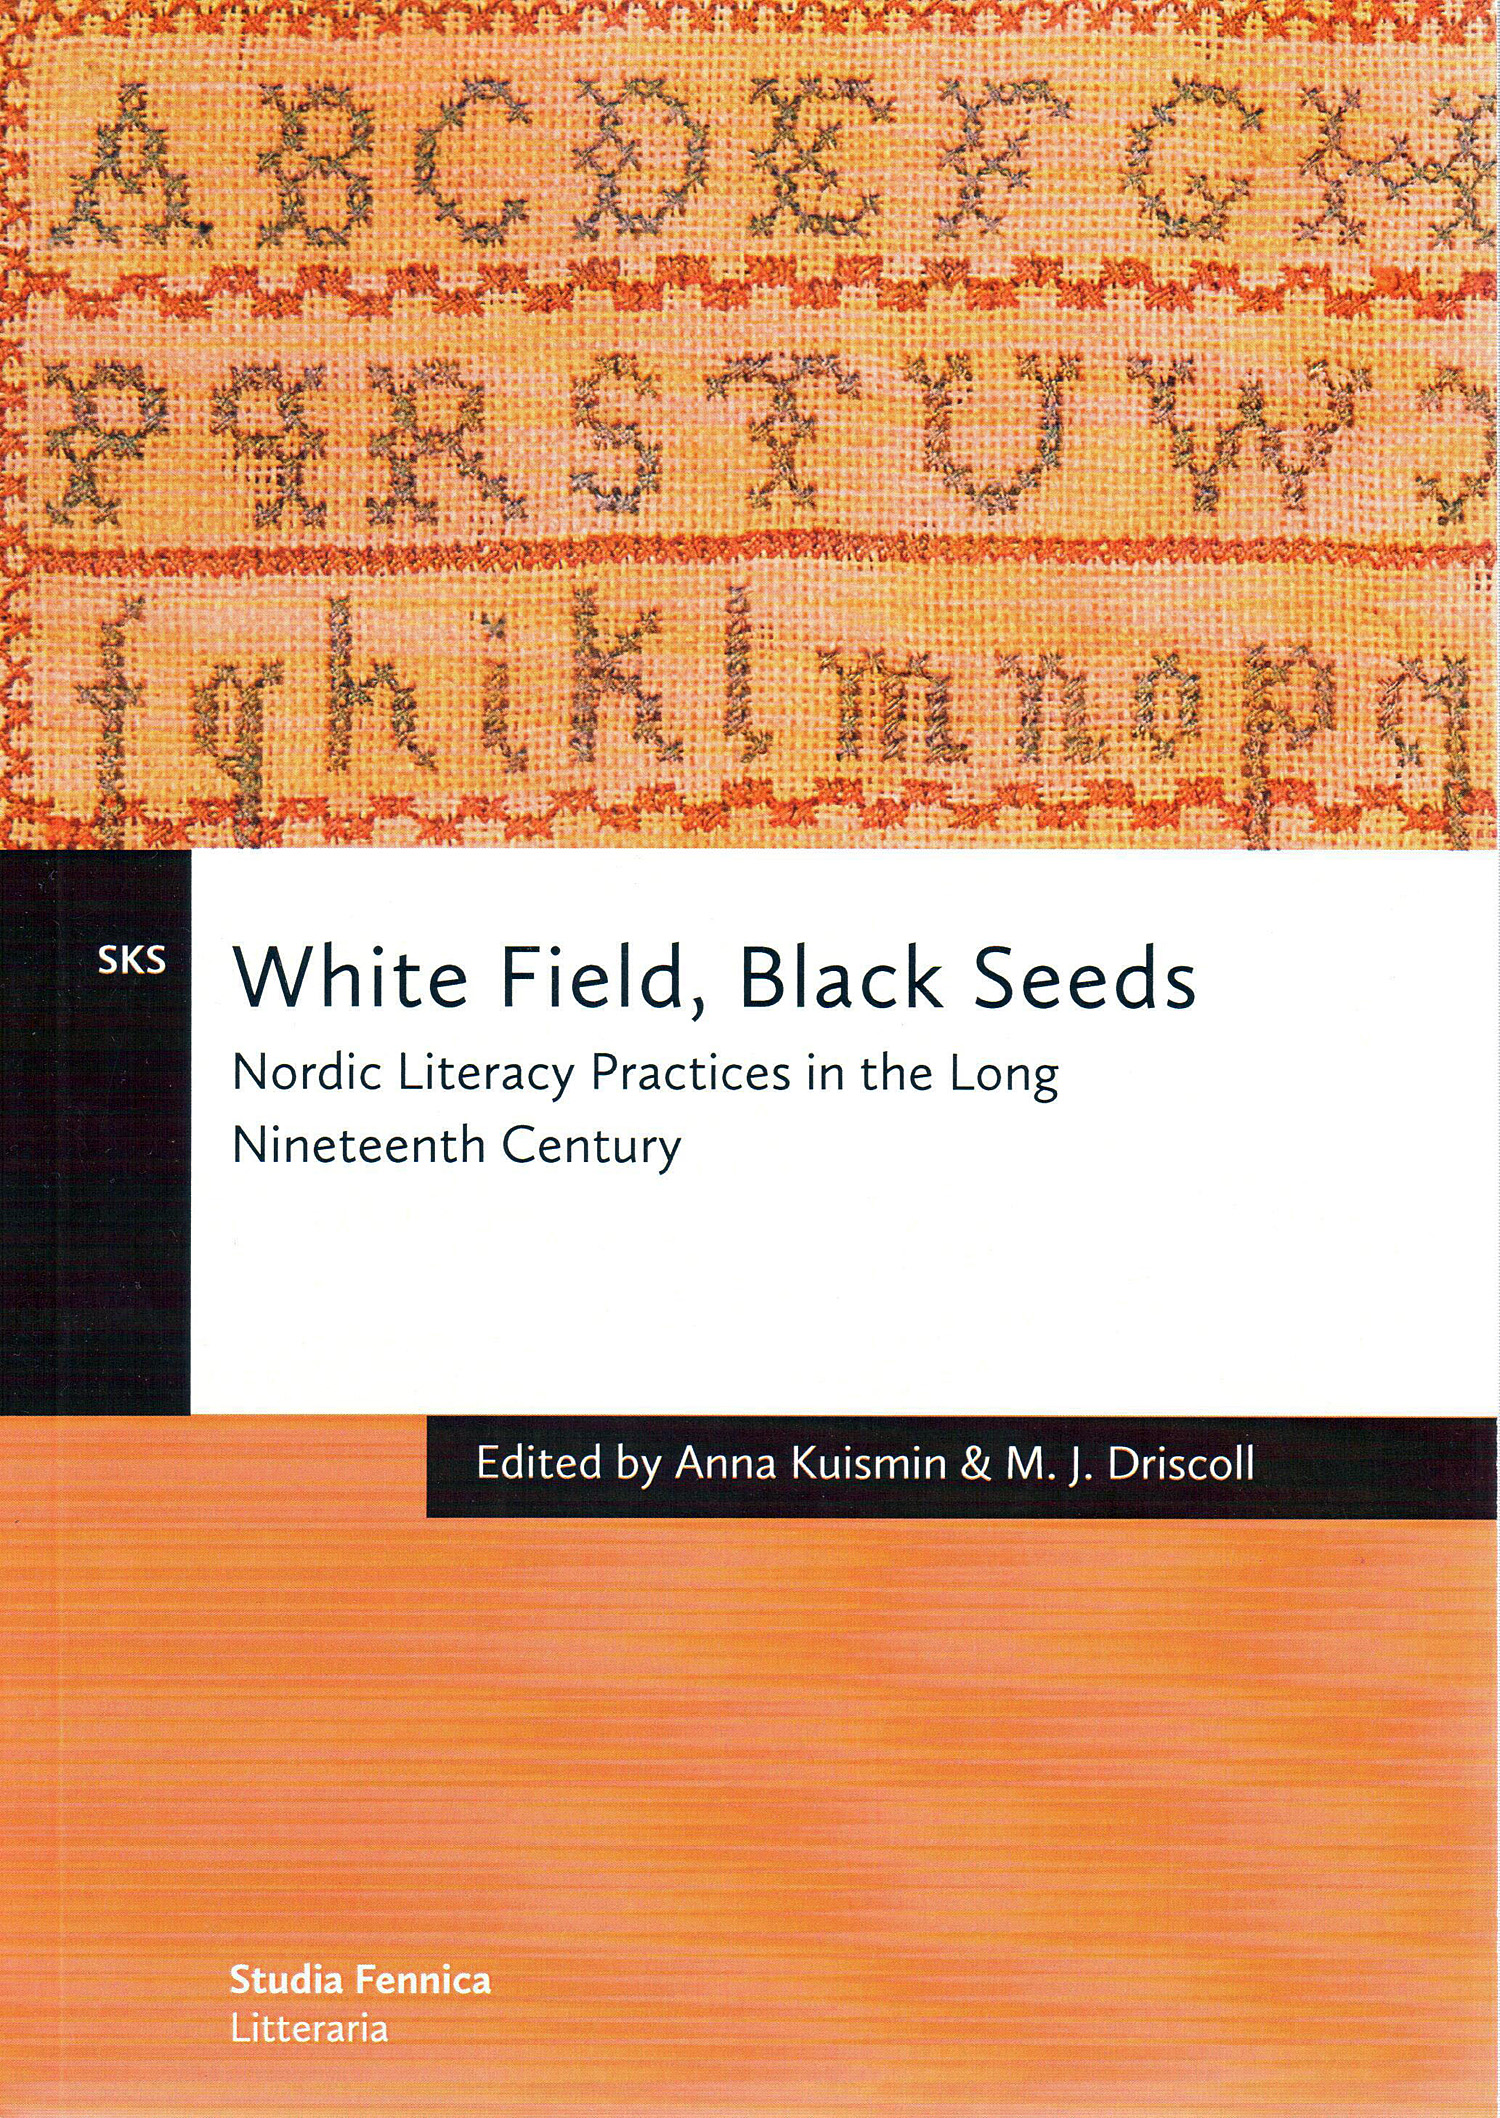 White field, black seeds (Helsinki: Finnish Literature Society, 2013)